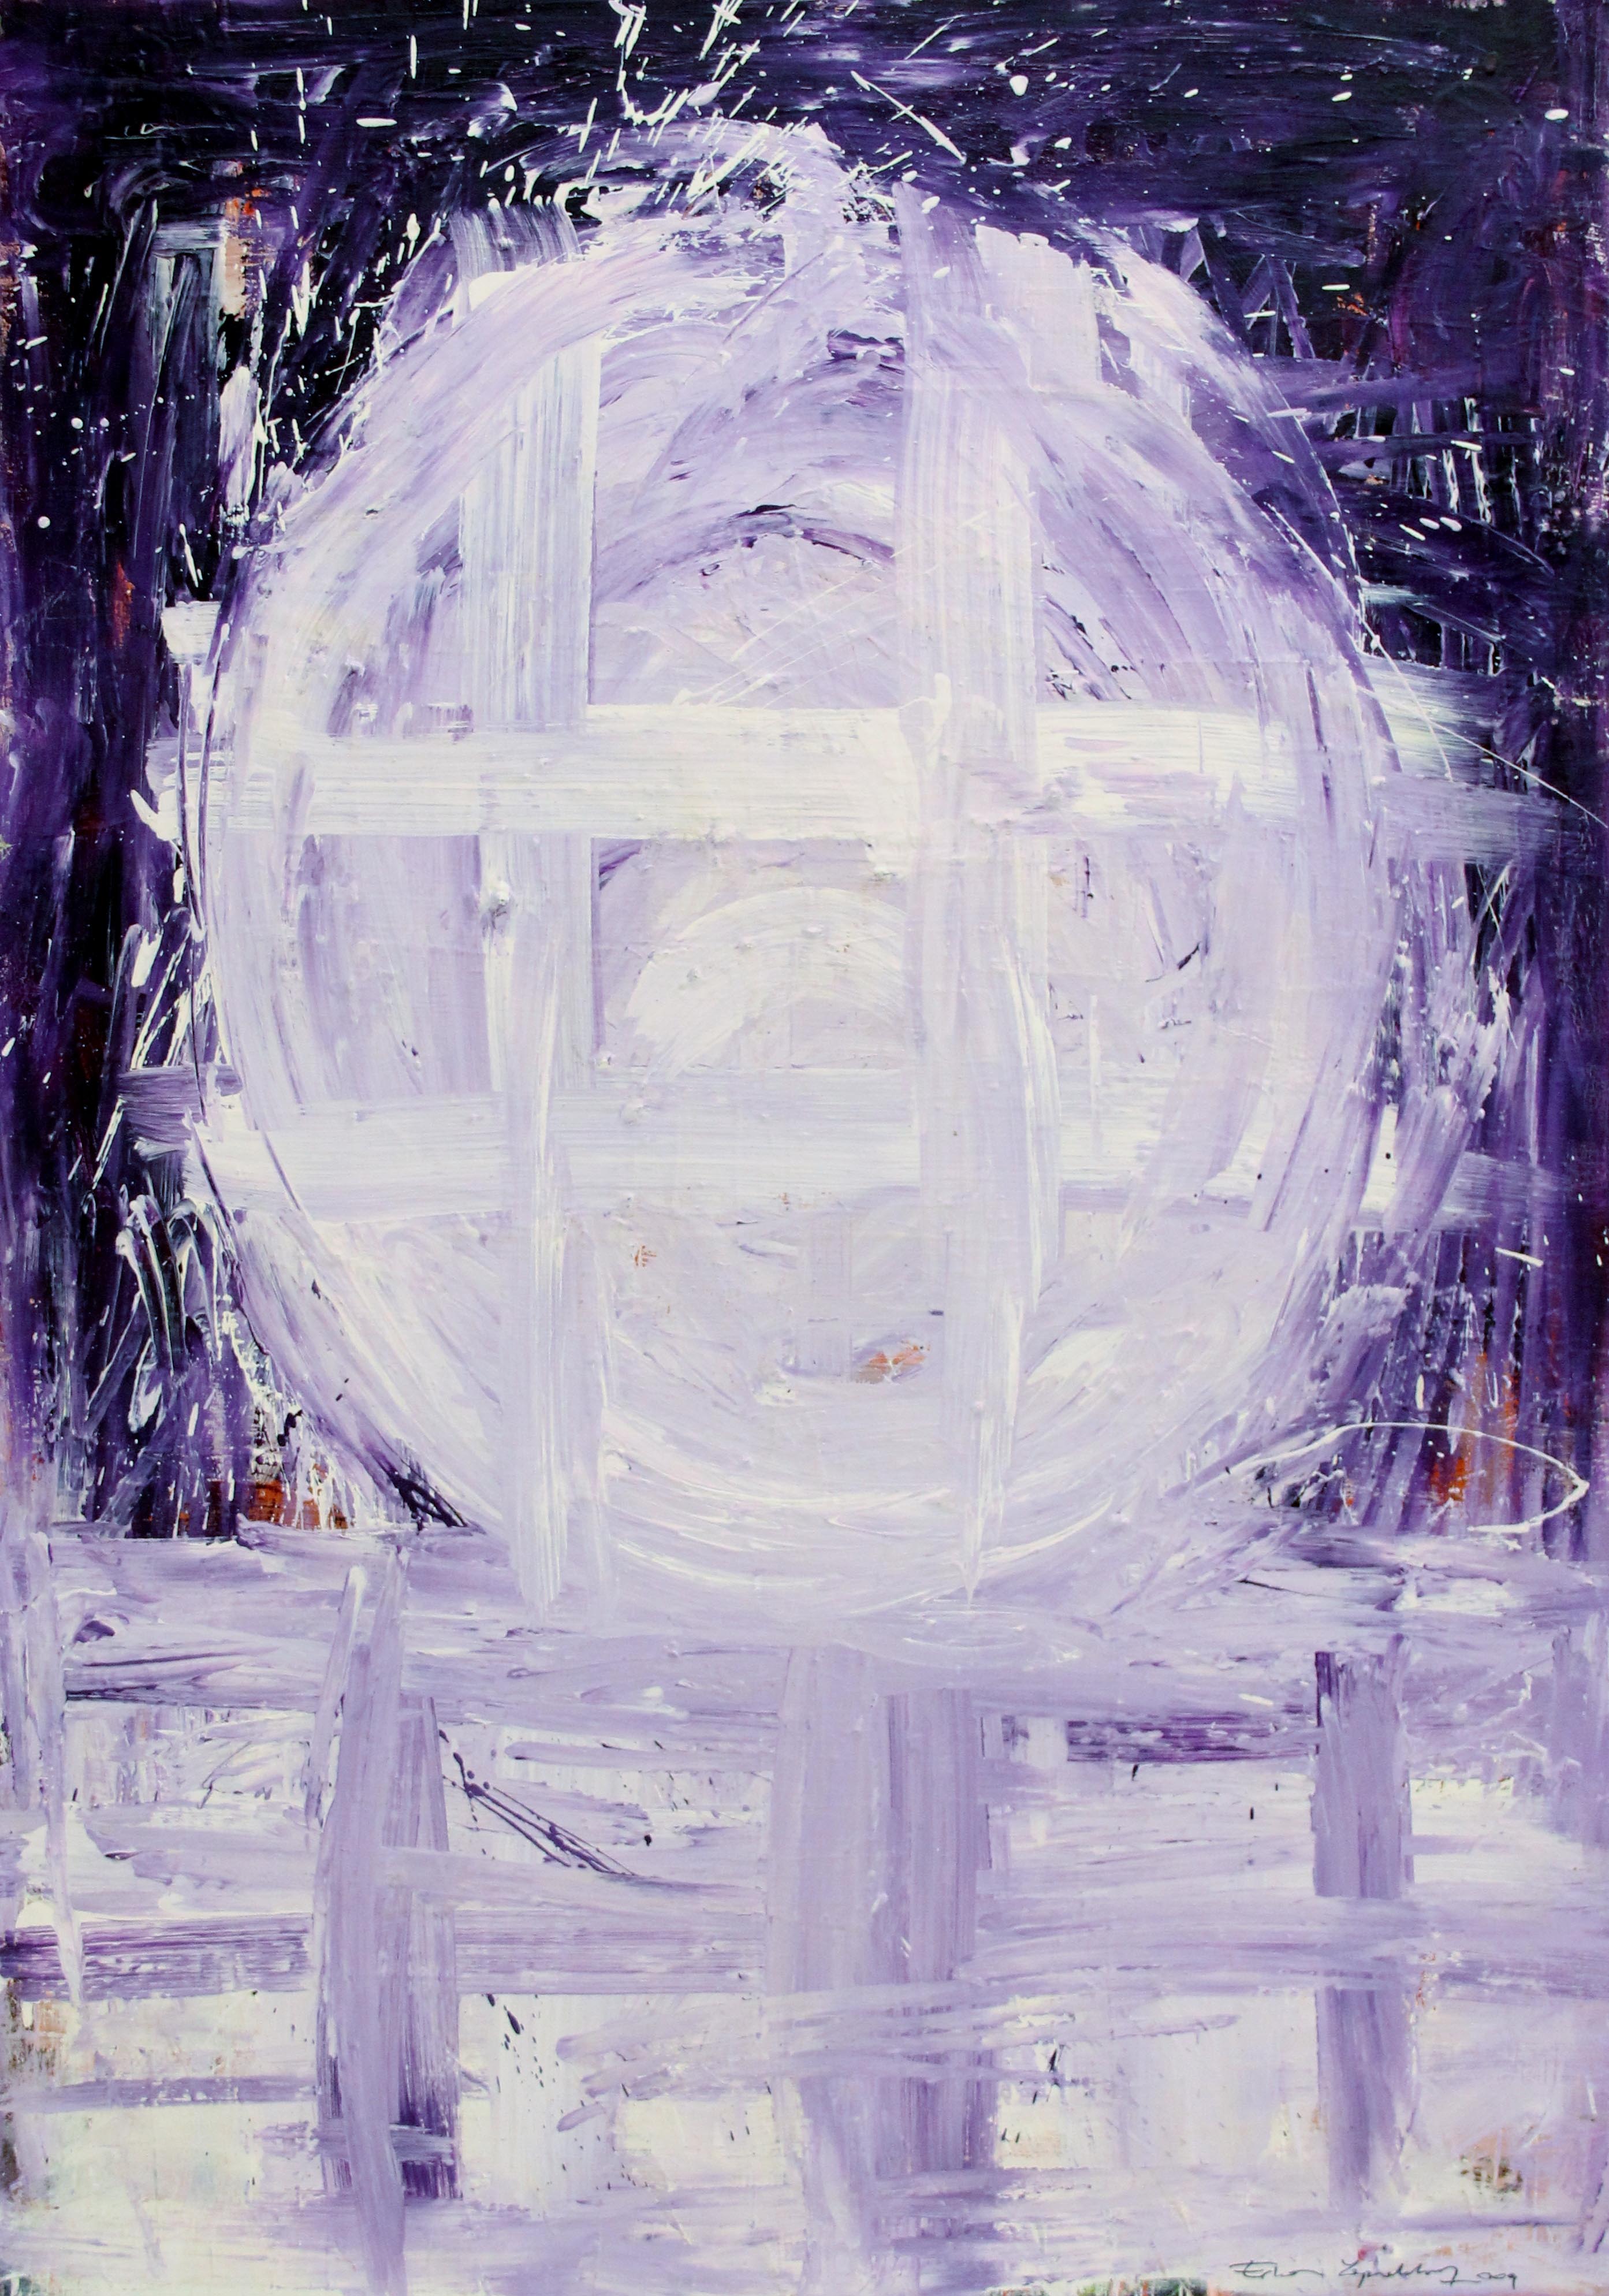 İsimsiz- Untitled, 2009, Tuval üzerine yağlıboya- Oil on canvas, 130x90 cm